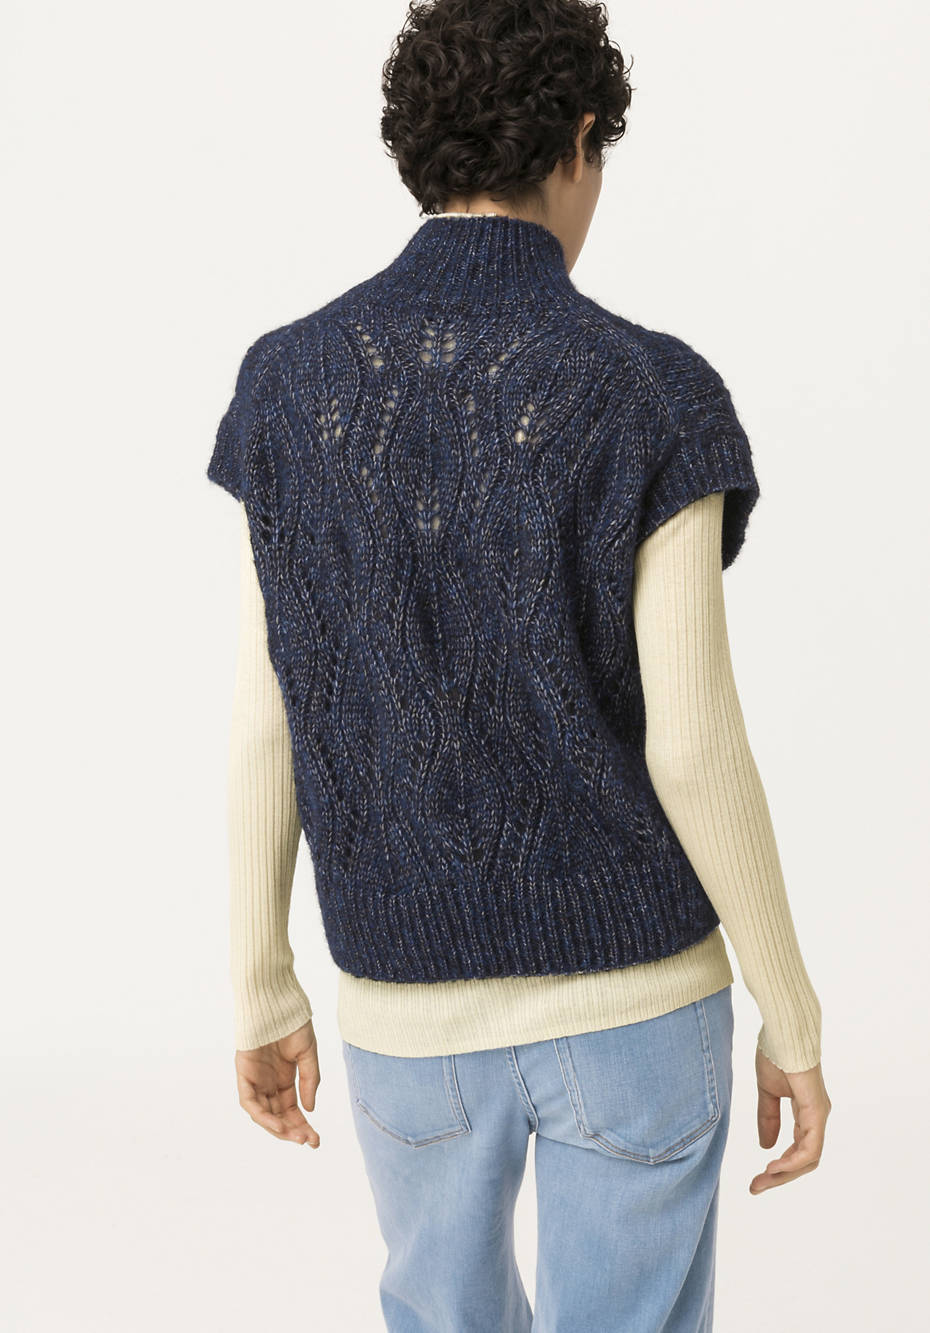 Alpaca sweater with organic Pima cotton